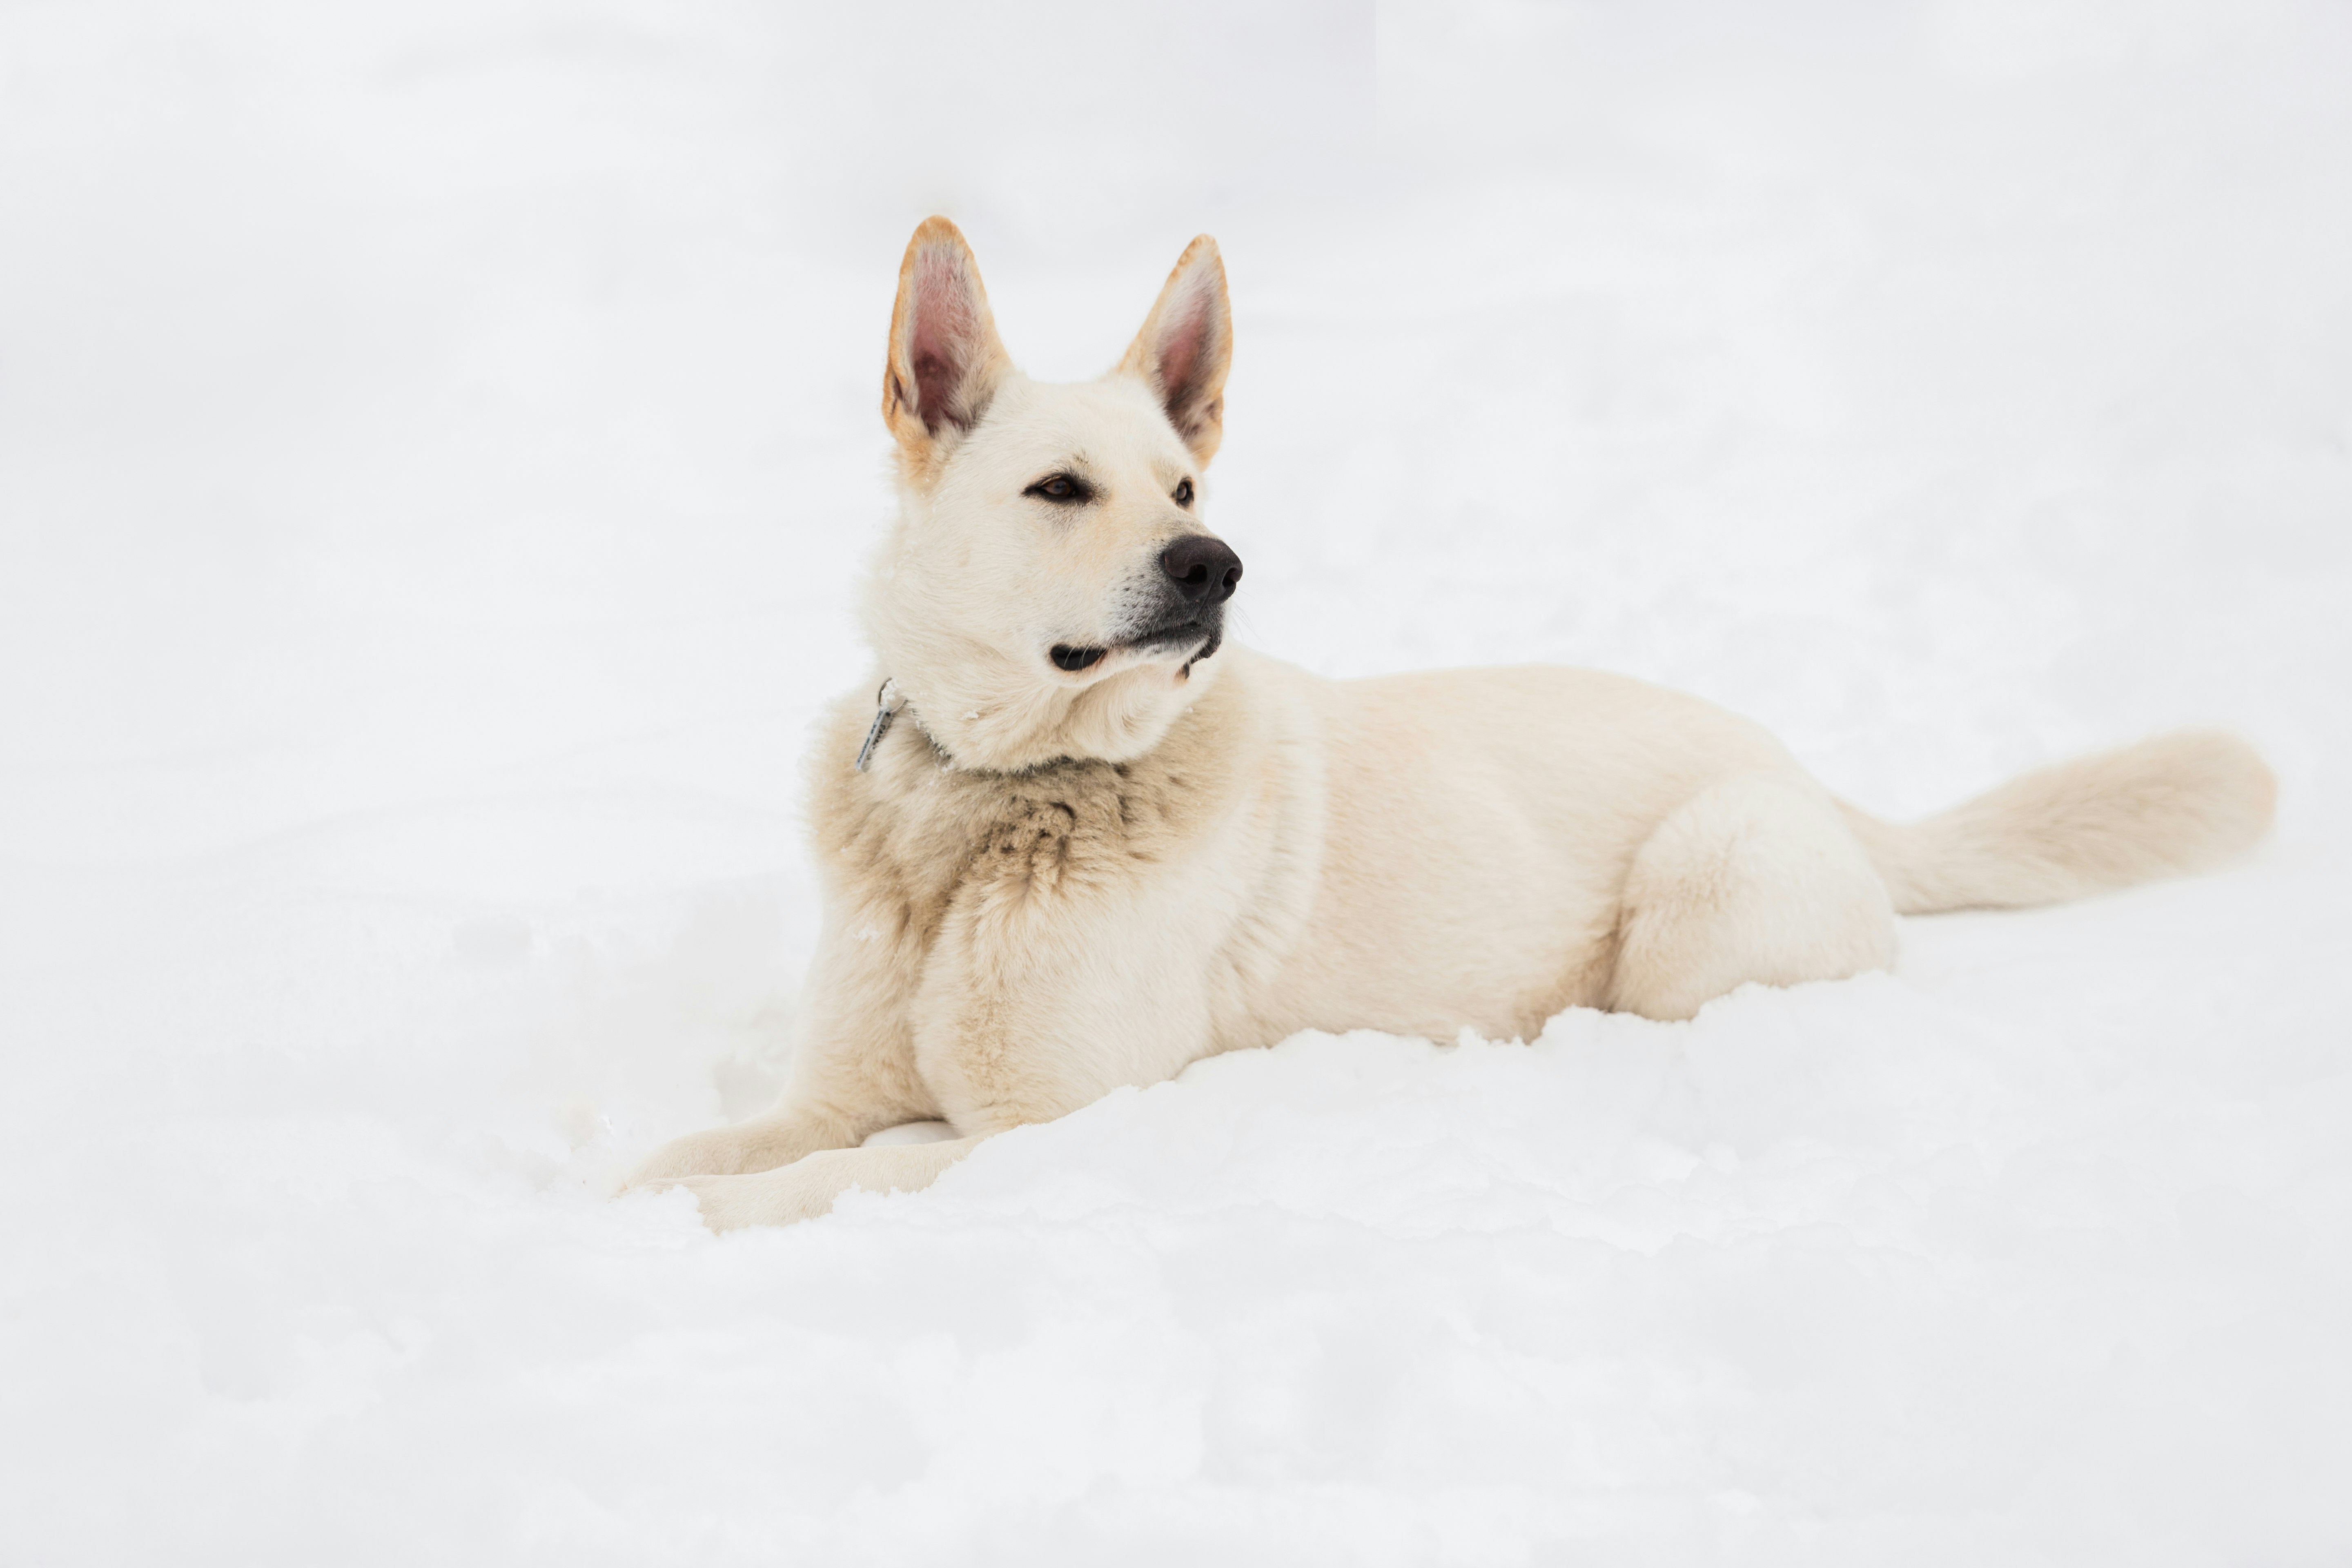 white short coated dog on snow covered ground